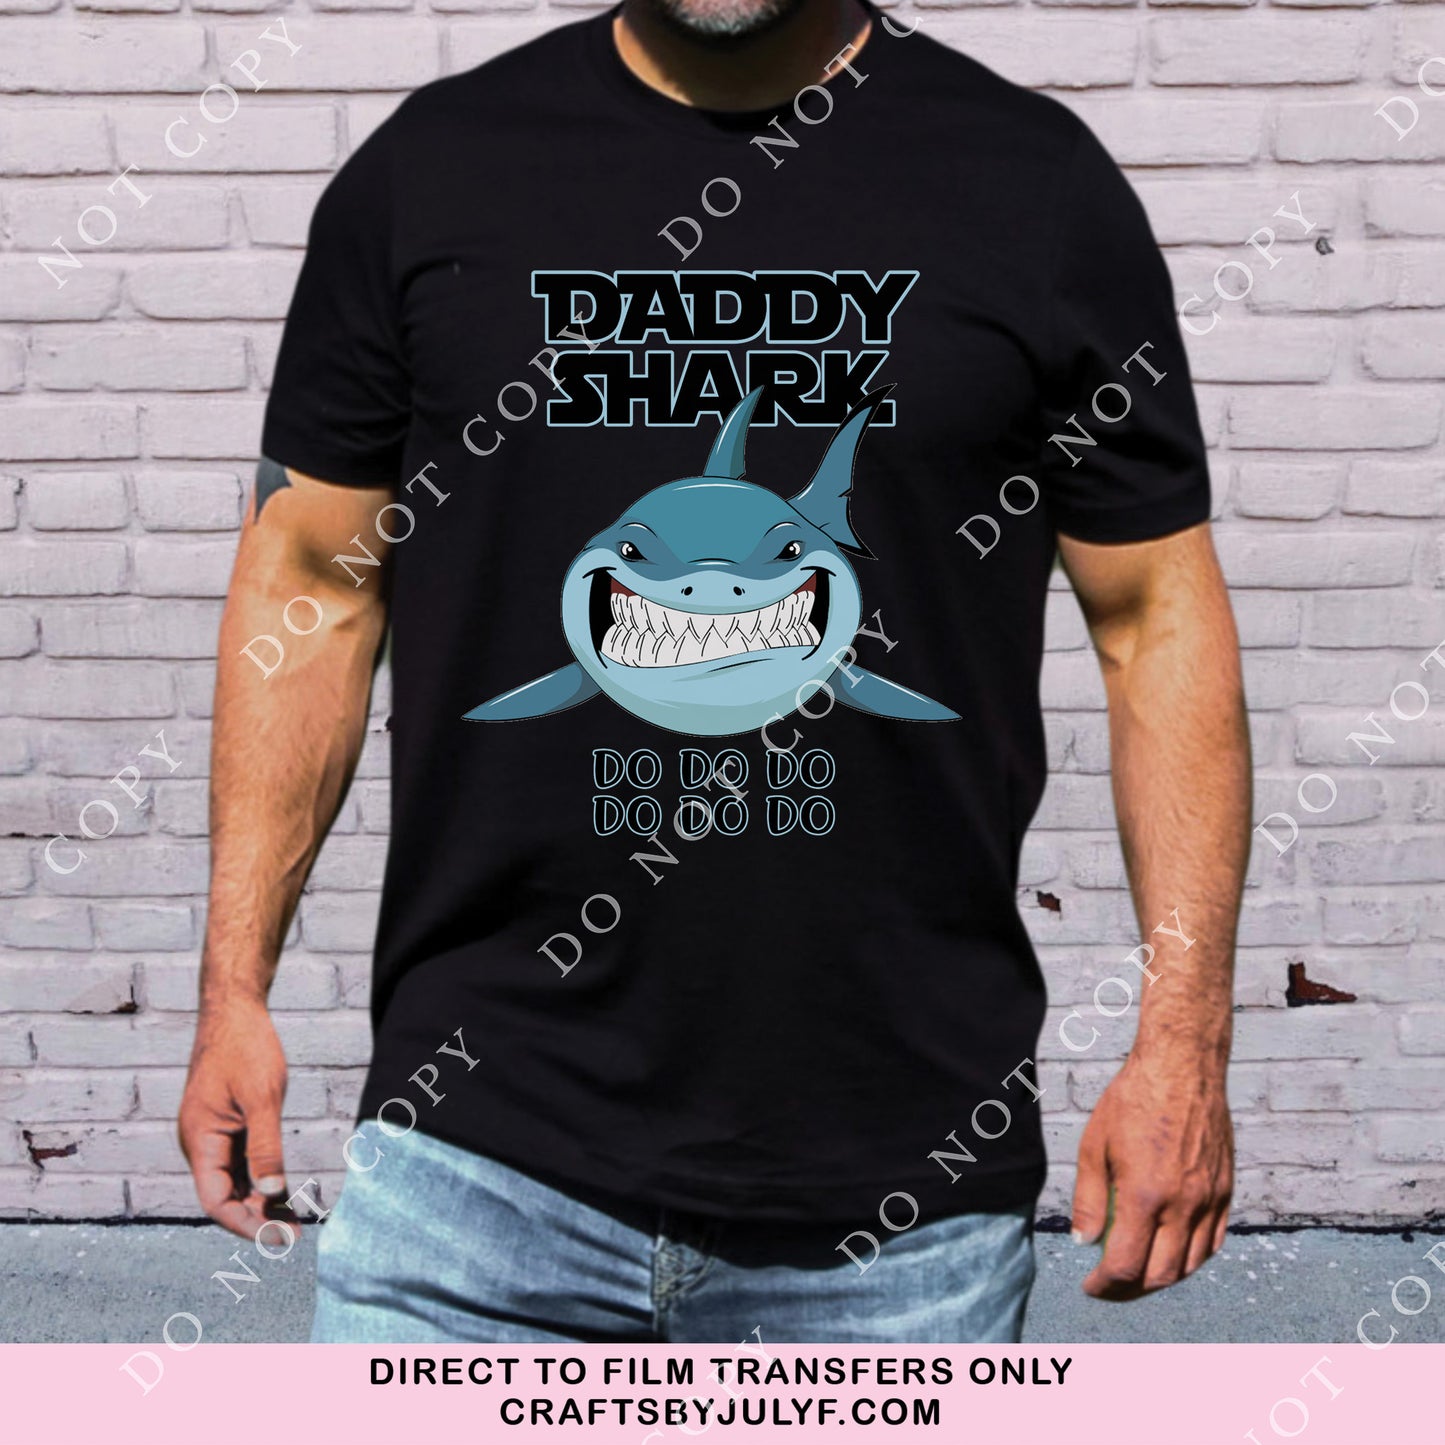 Daddy Shark - DTF Transfer